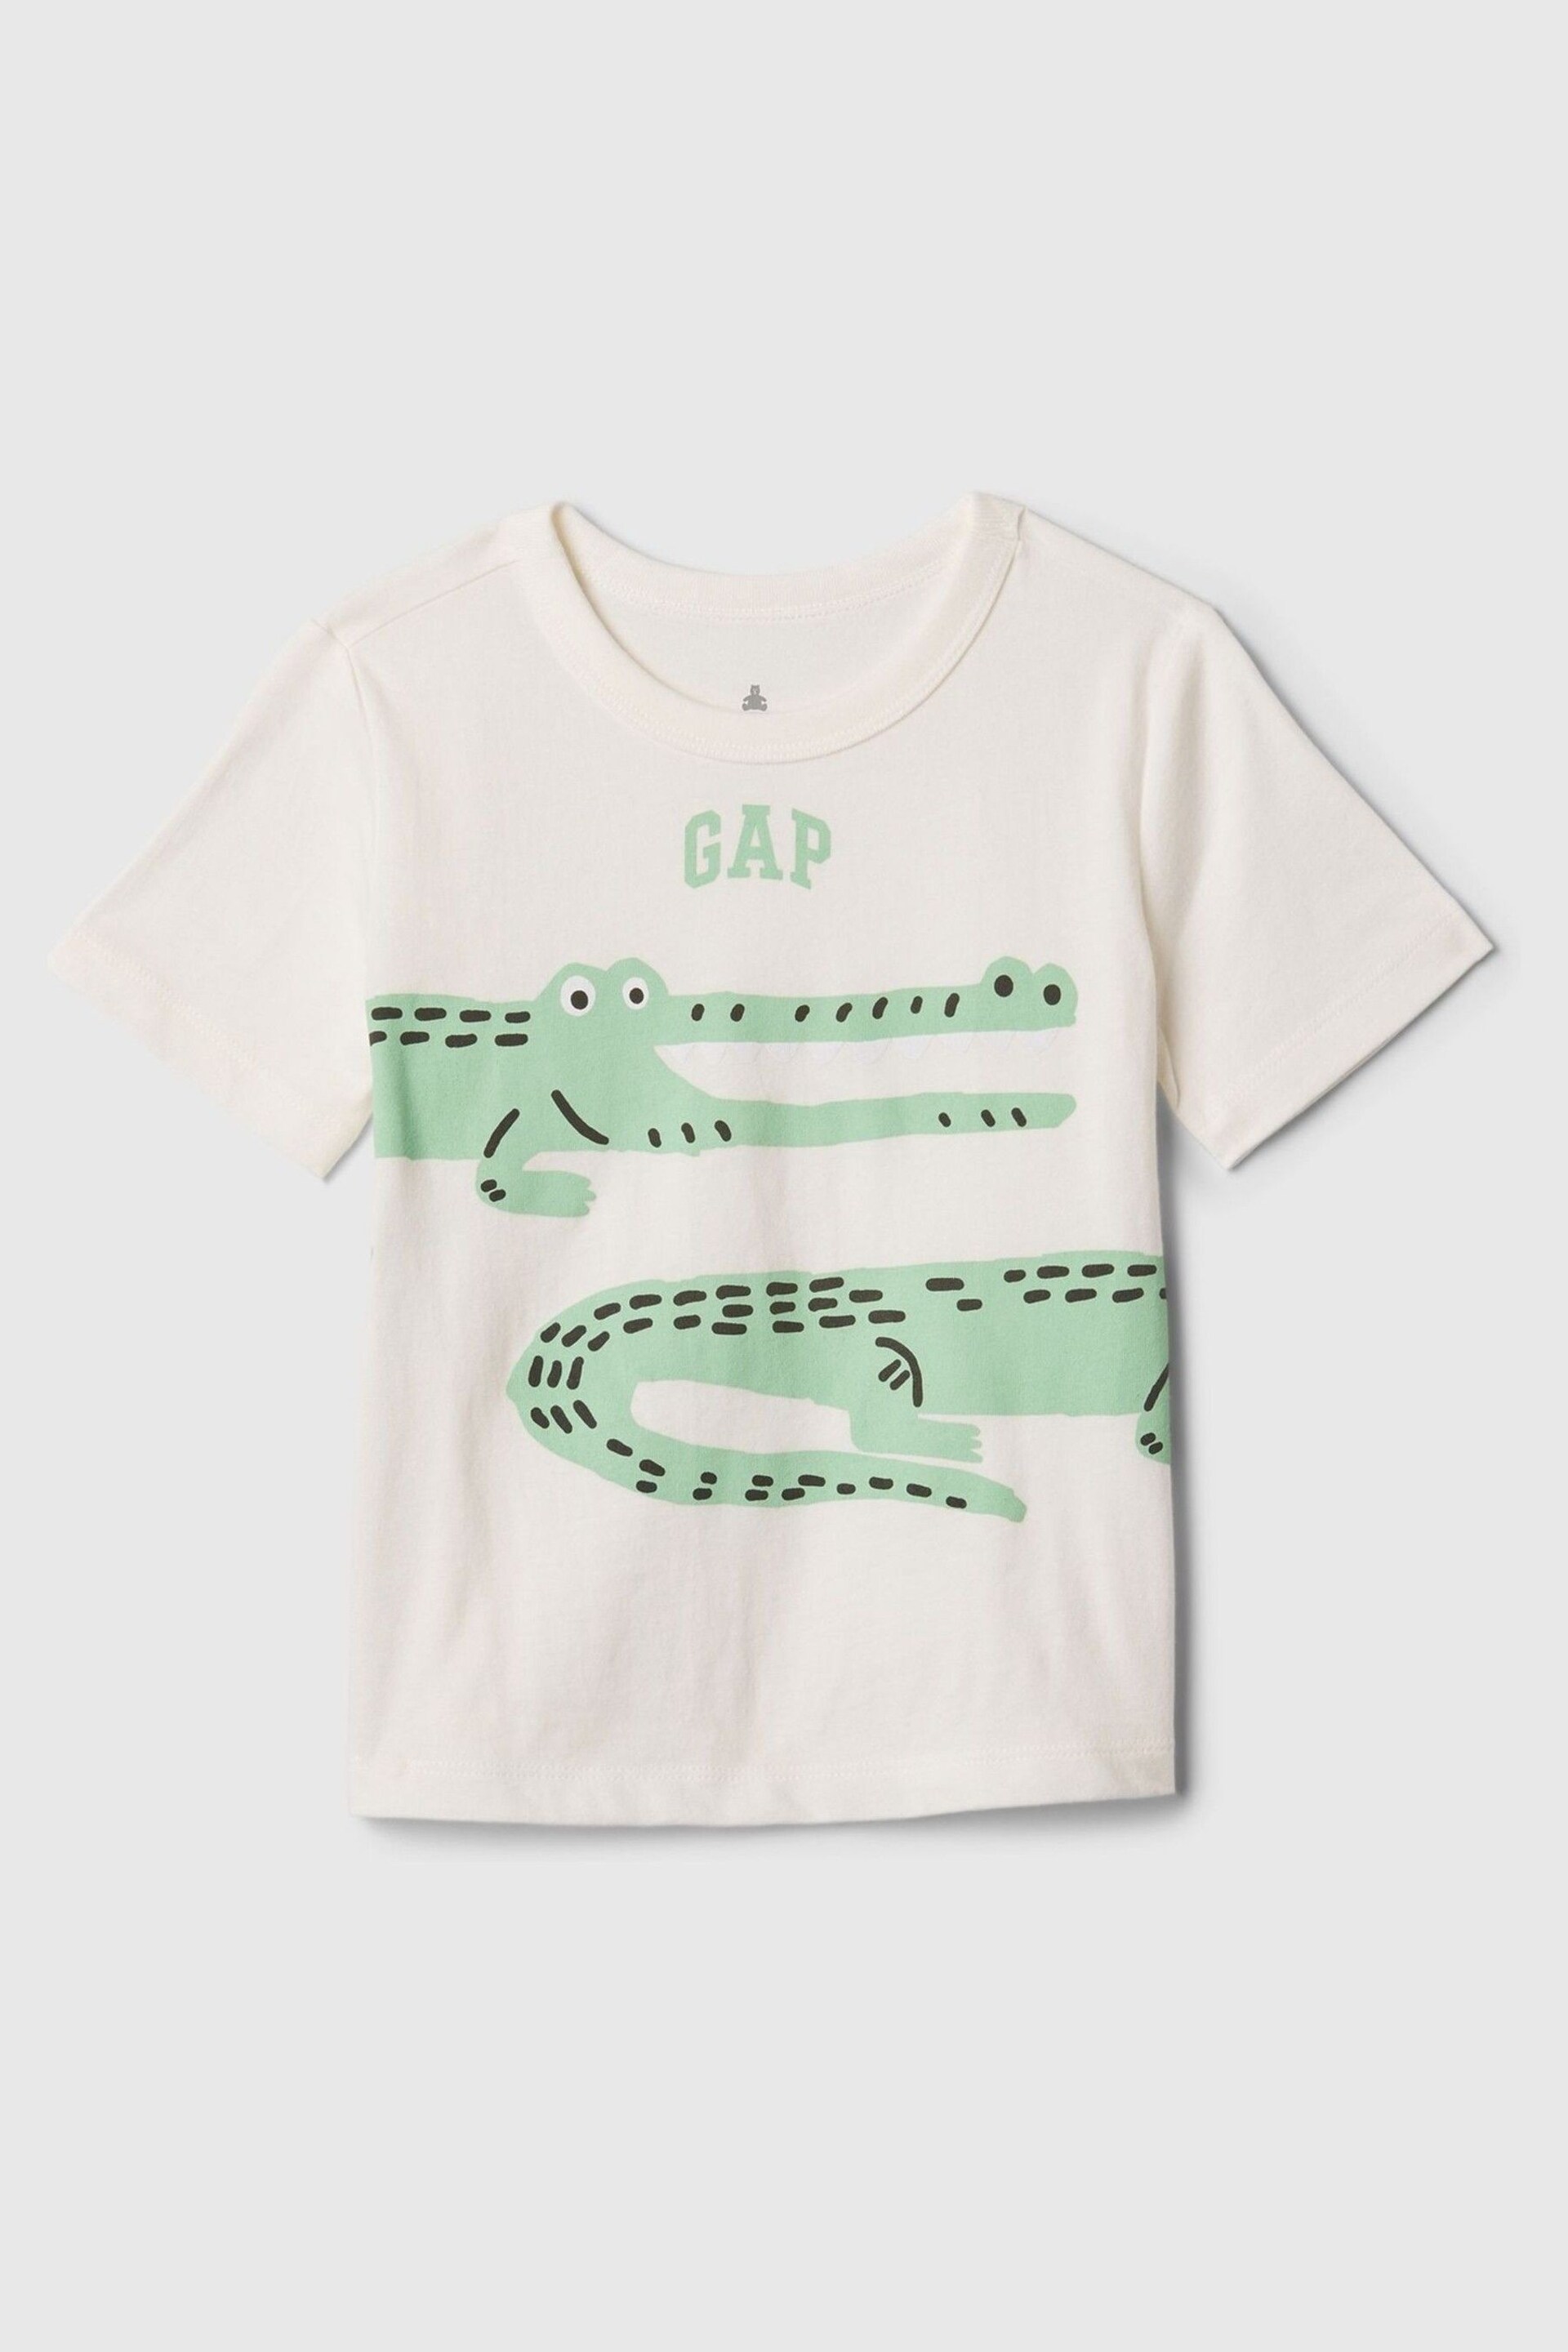 Gap Cream Crocodile Graphic Logo Short Sleeve Crew Neck T-Shirt (Newborn-5yrs) - Image 1 of 3